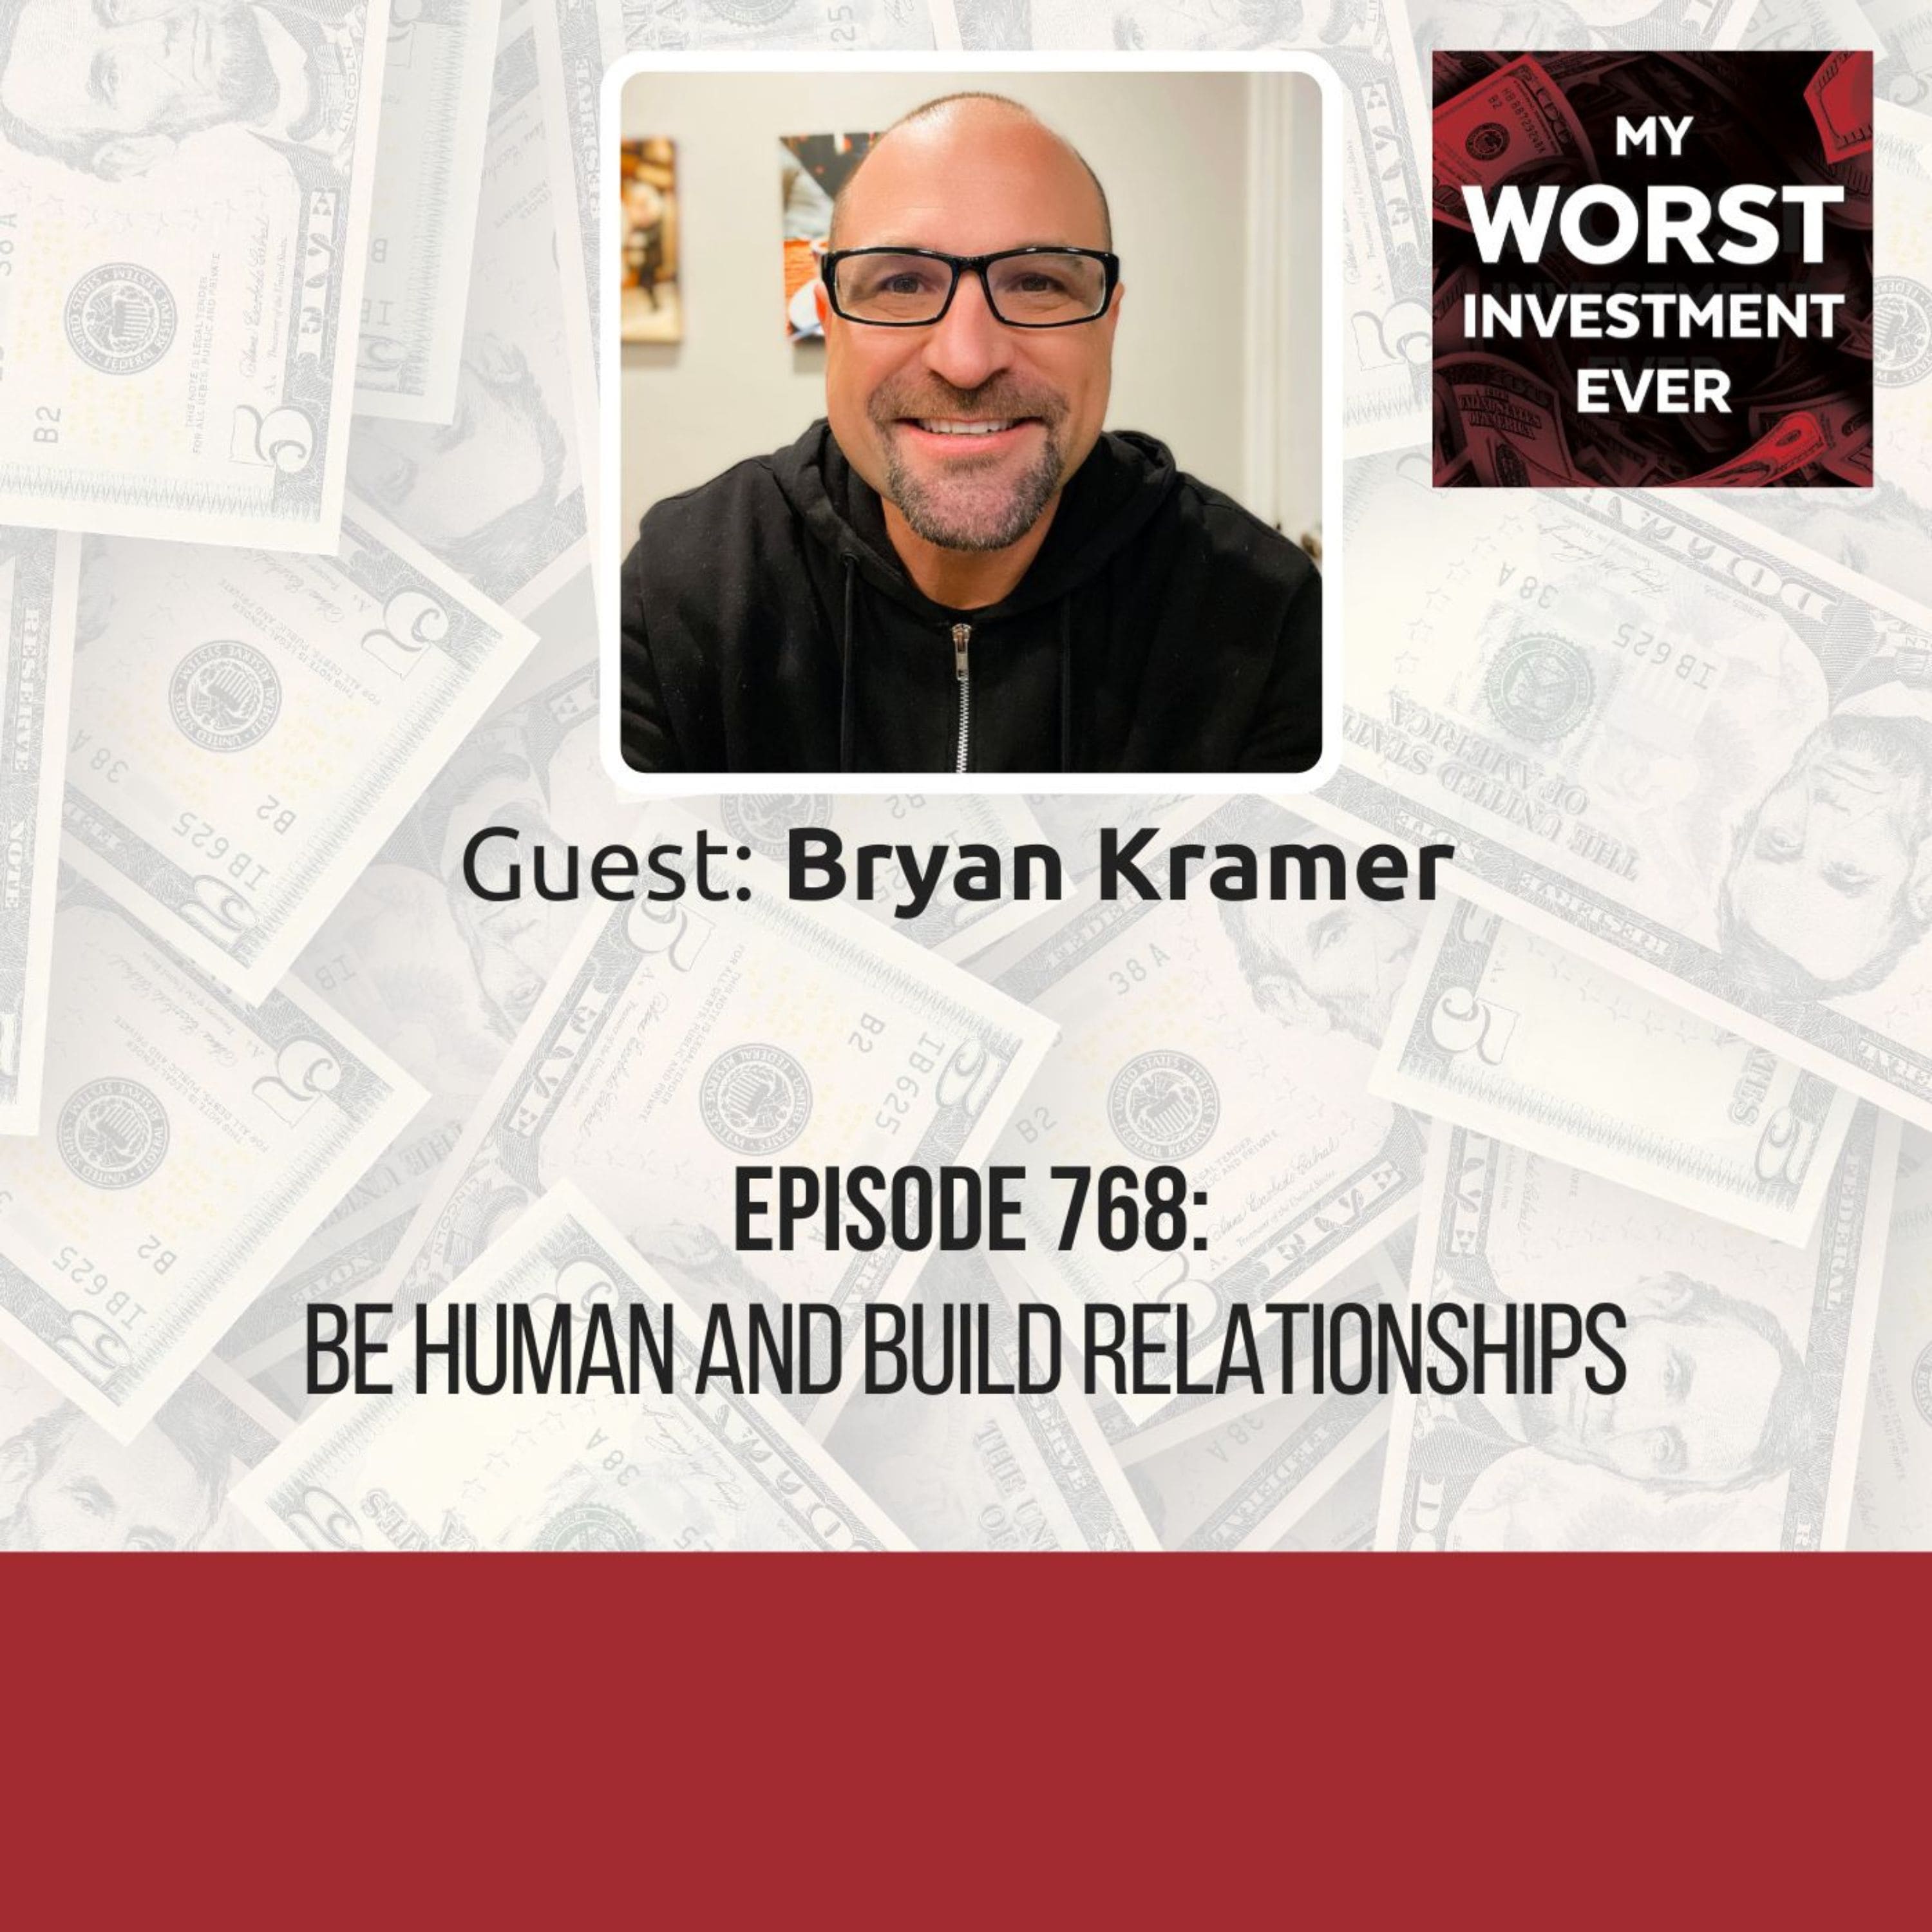 Bryan Kramer - Be Human and Build Relationships